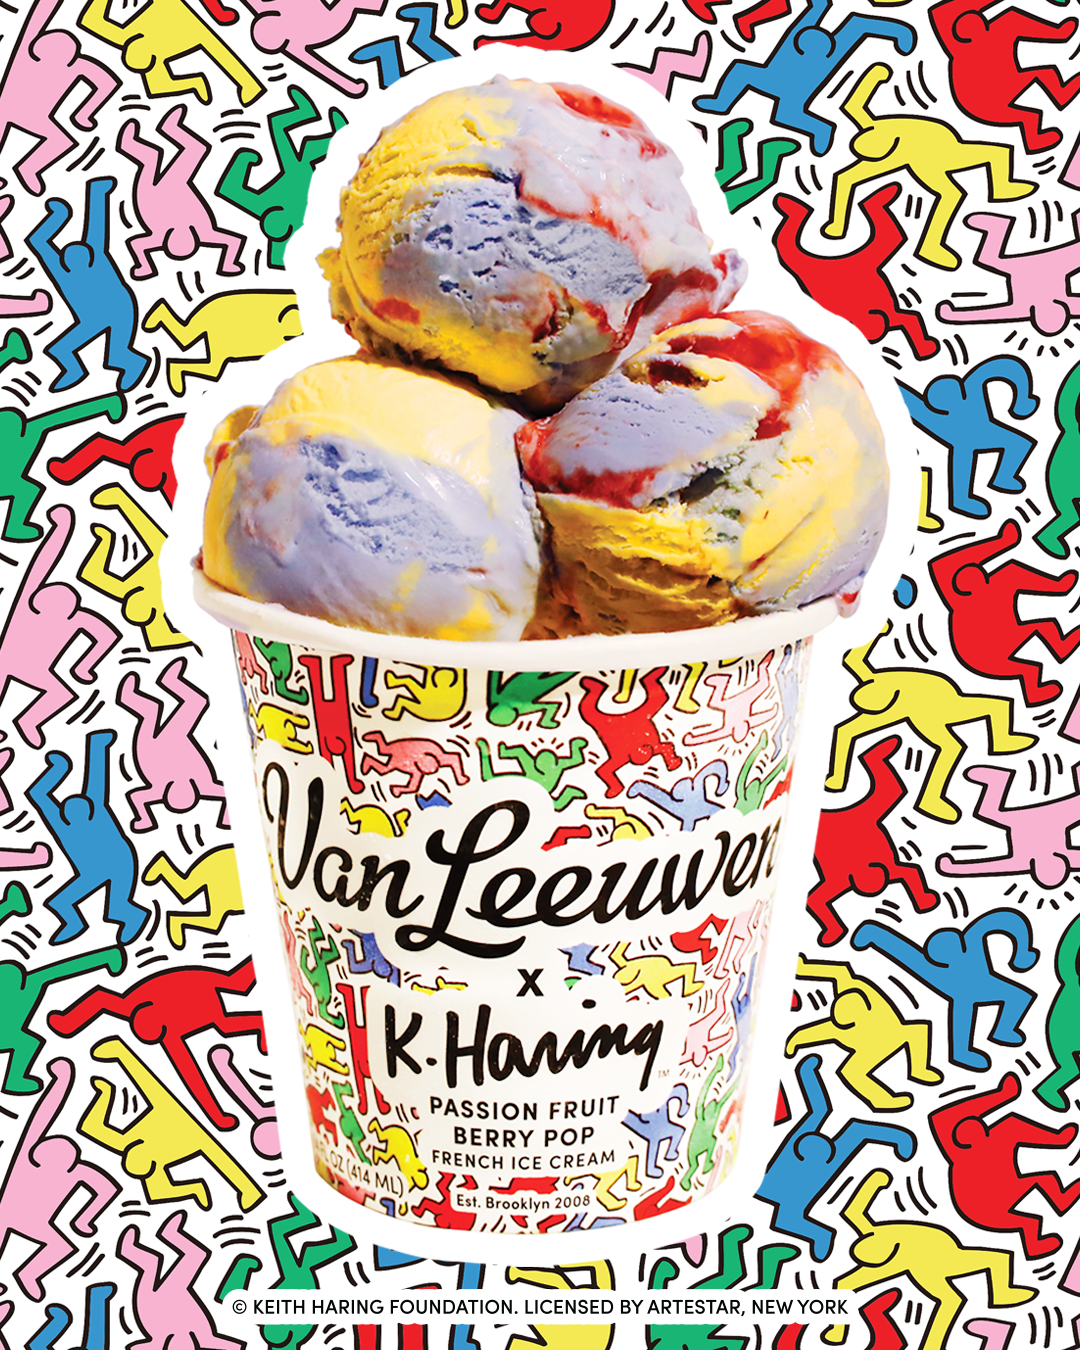 Van Leeuwen debuts Keith Haring ice cream for Pride Month